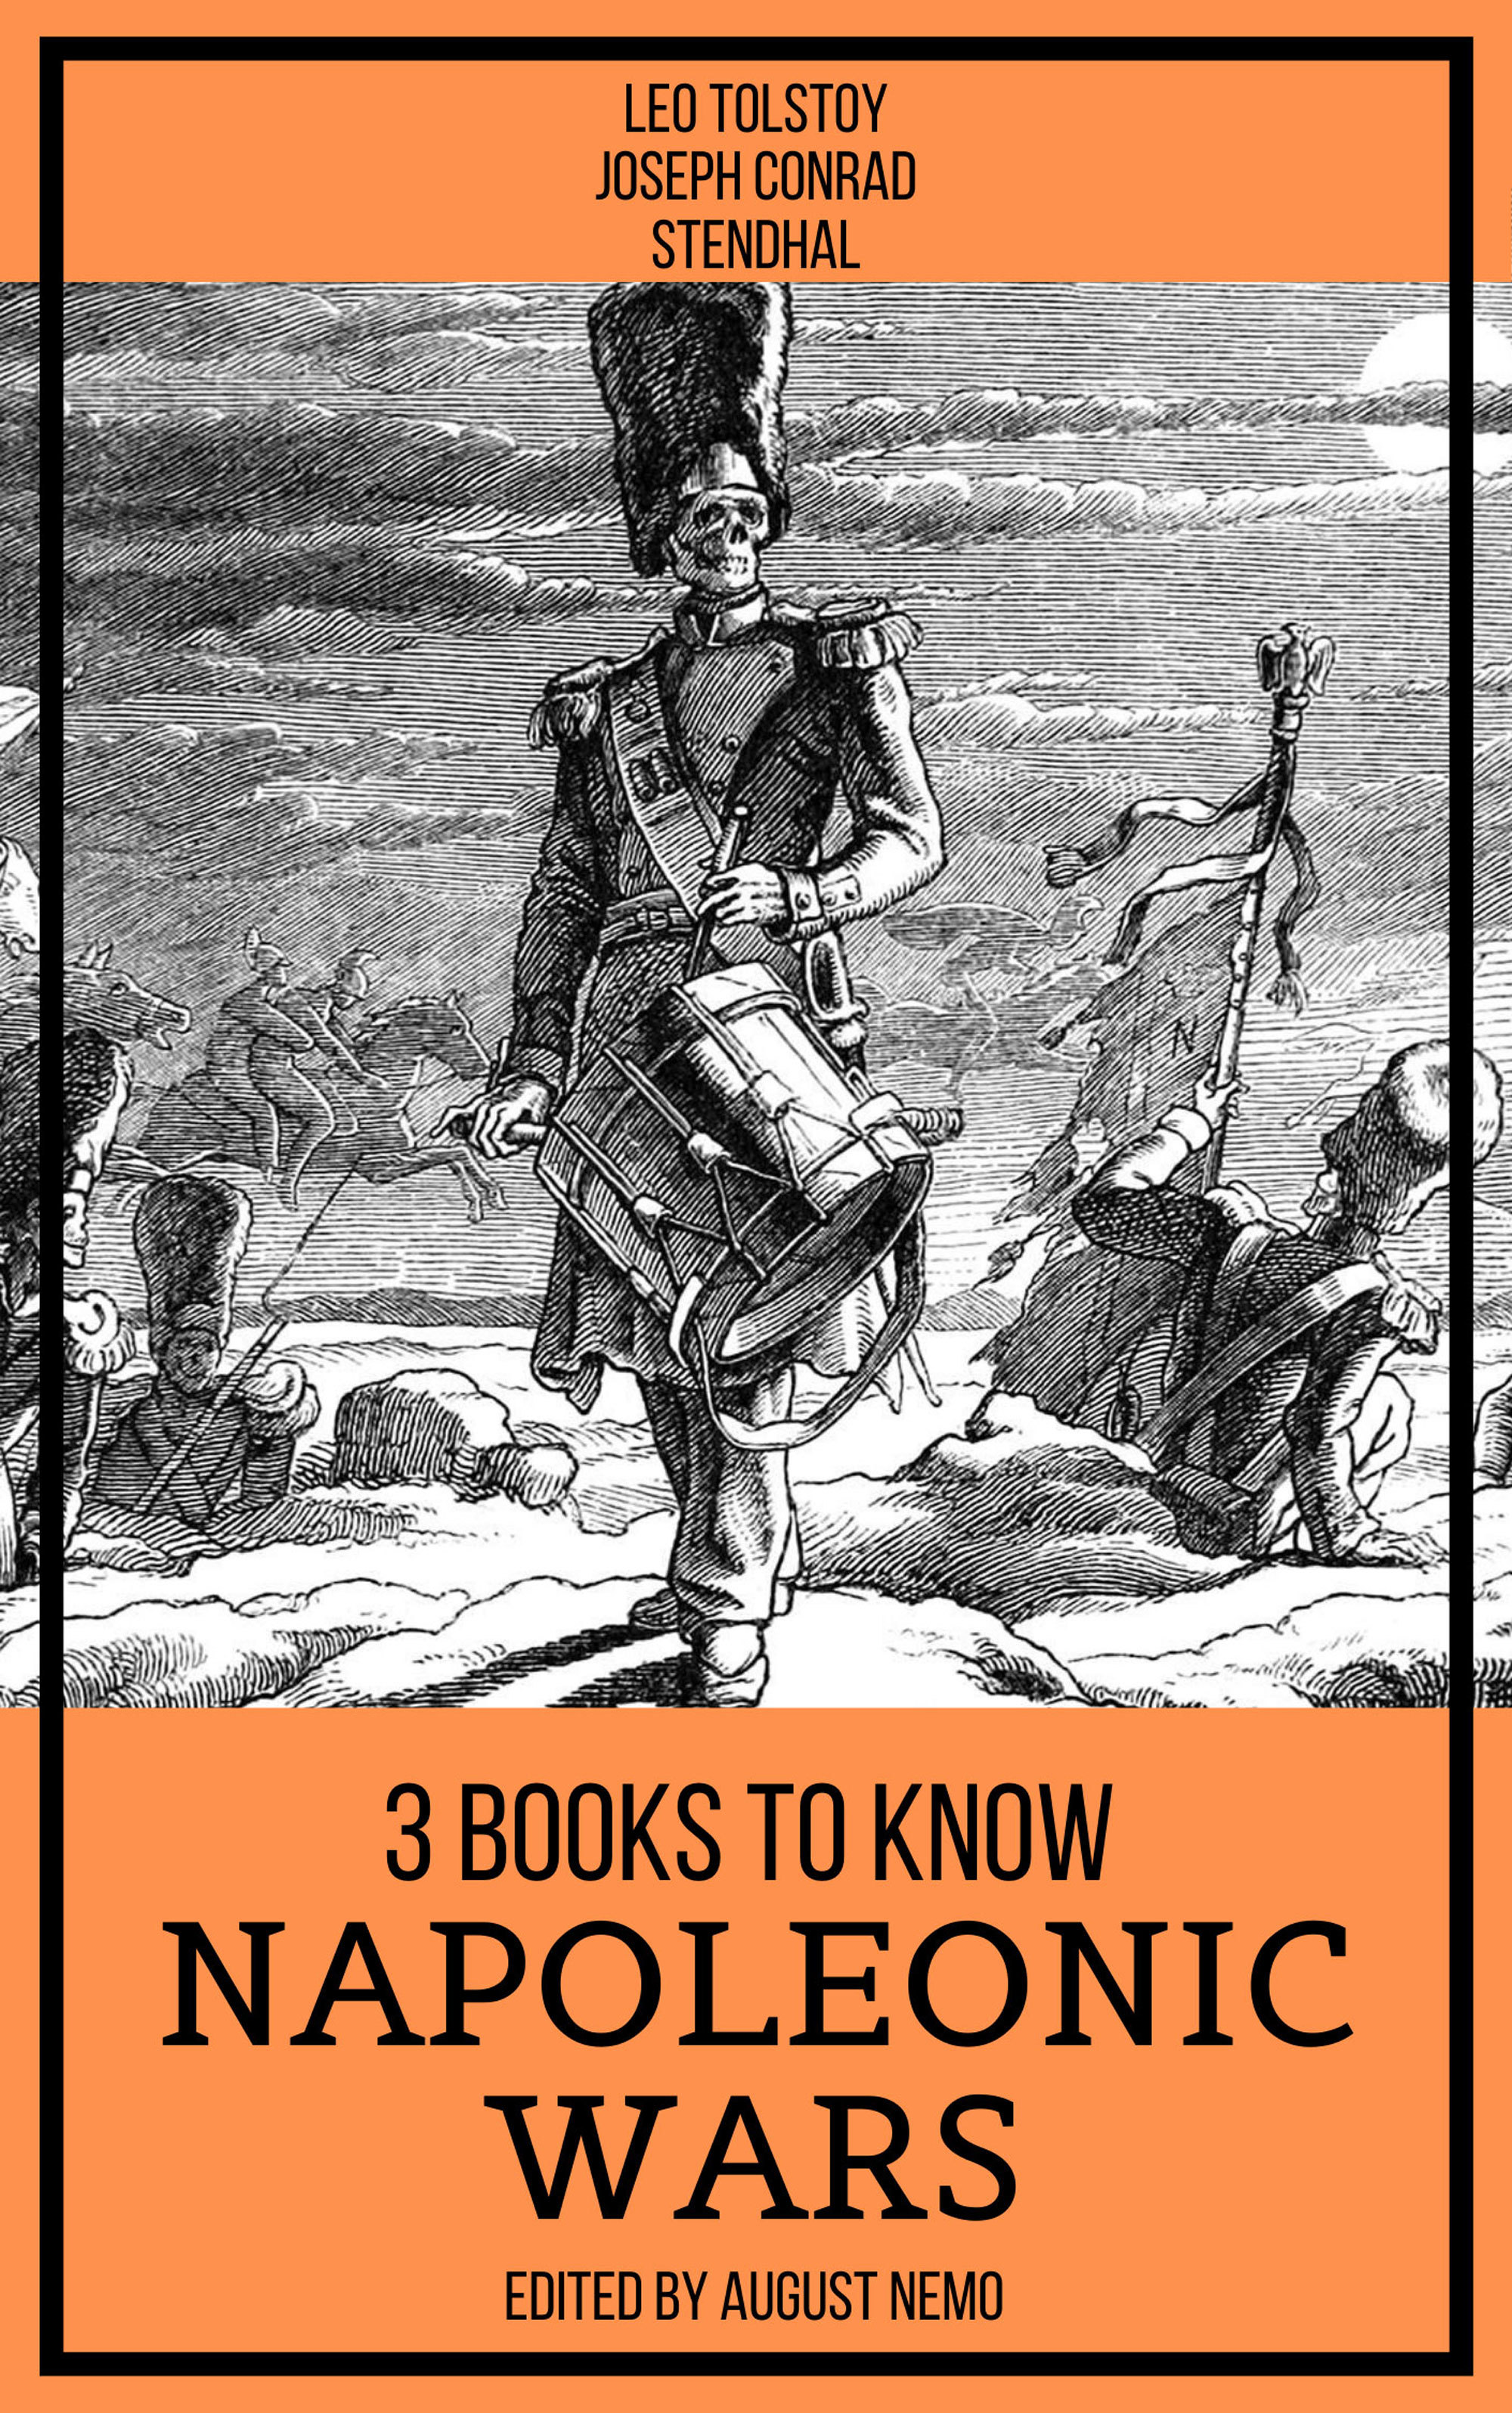 3 books to know Napoleonic Wars